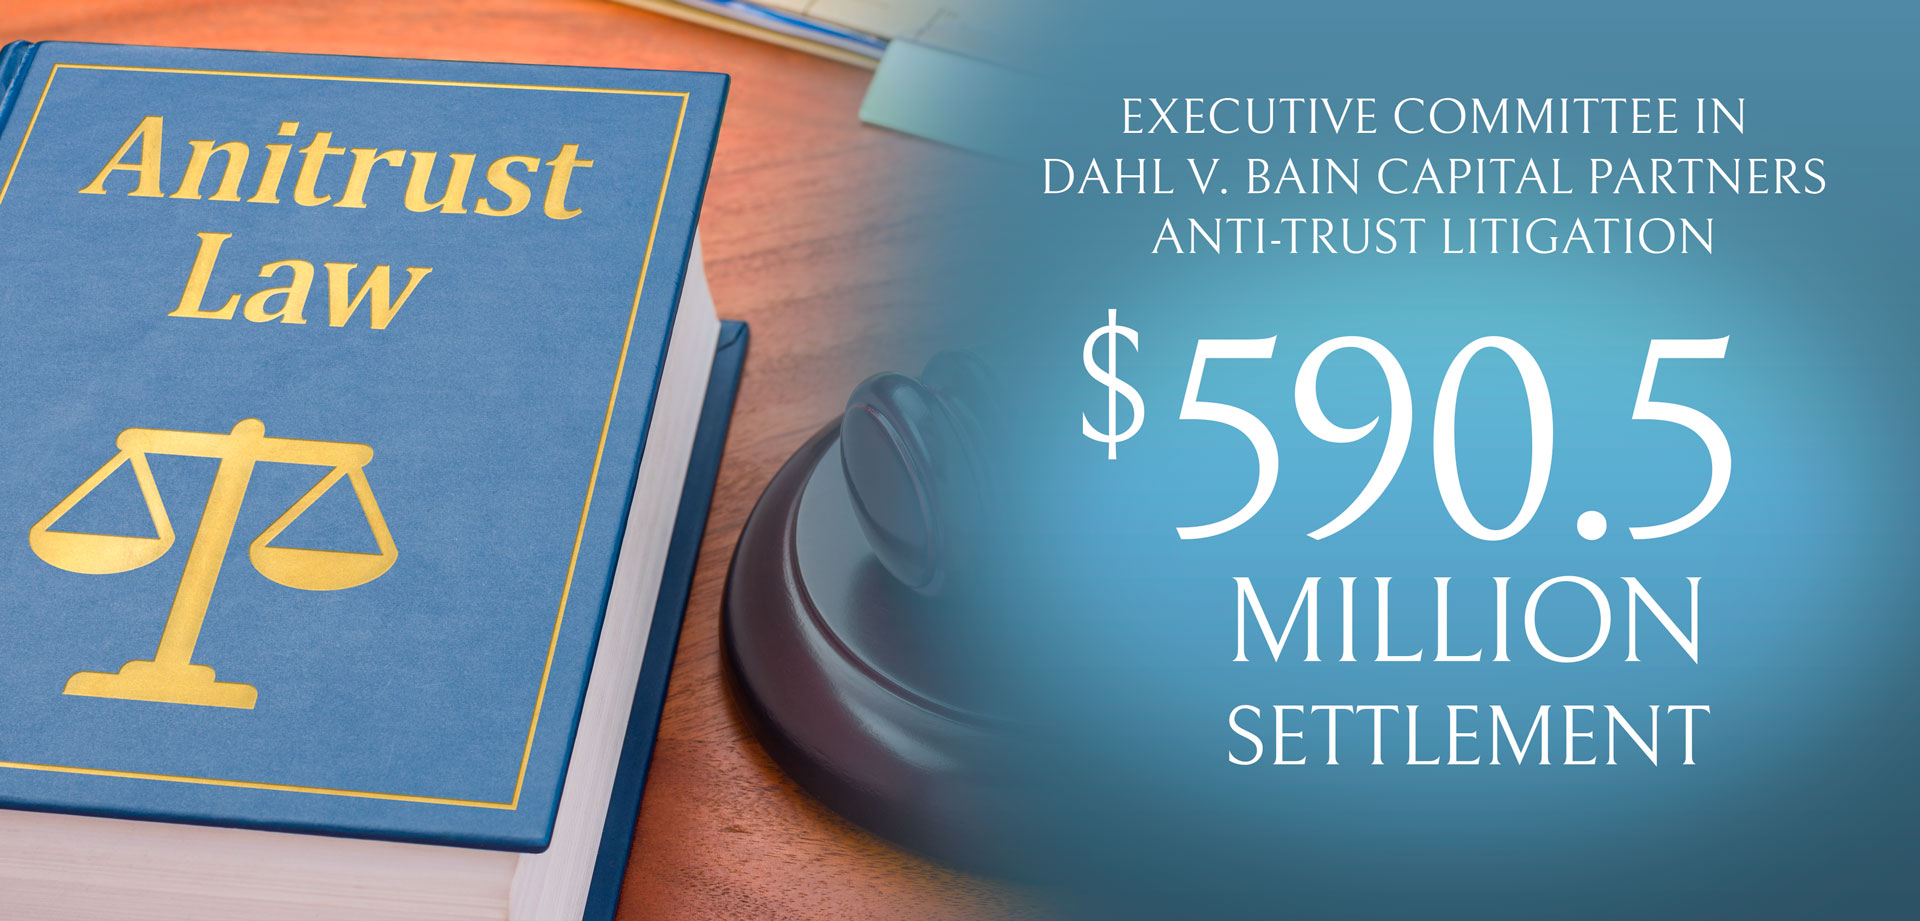 EXECUTIVE COMMITTEE IN DAHL V. BAIN CAPITAL PARTNERS ANTI-TRUST LITIGATION Result: $590.5 million settlement